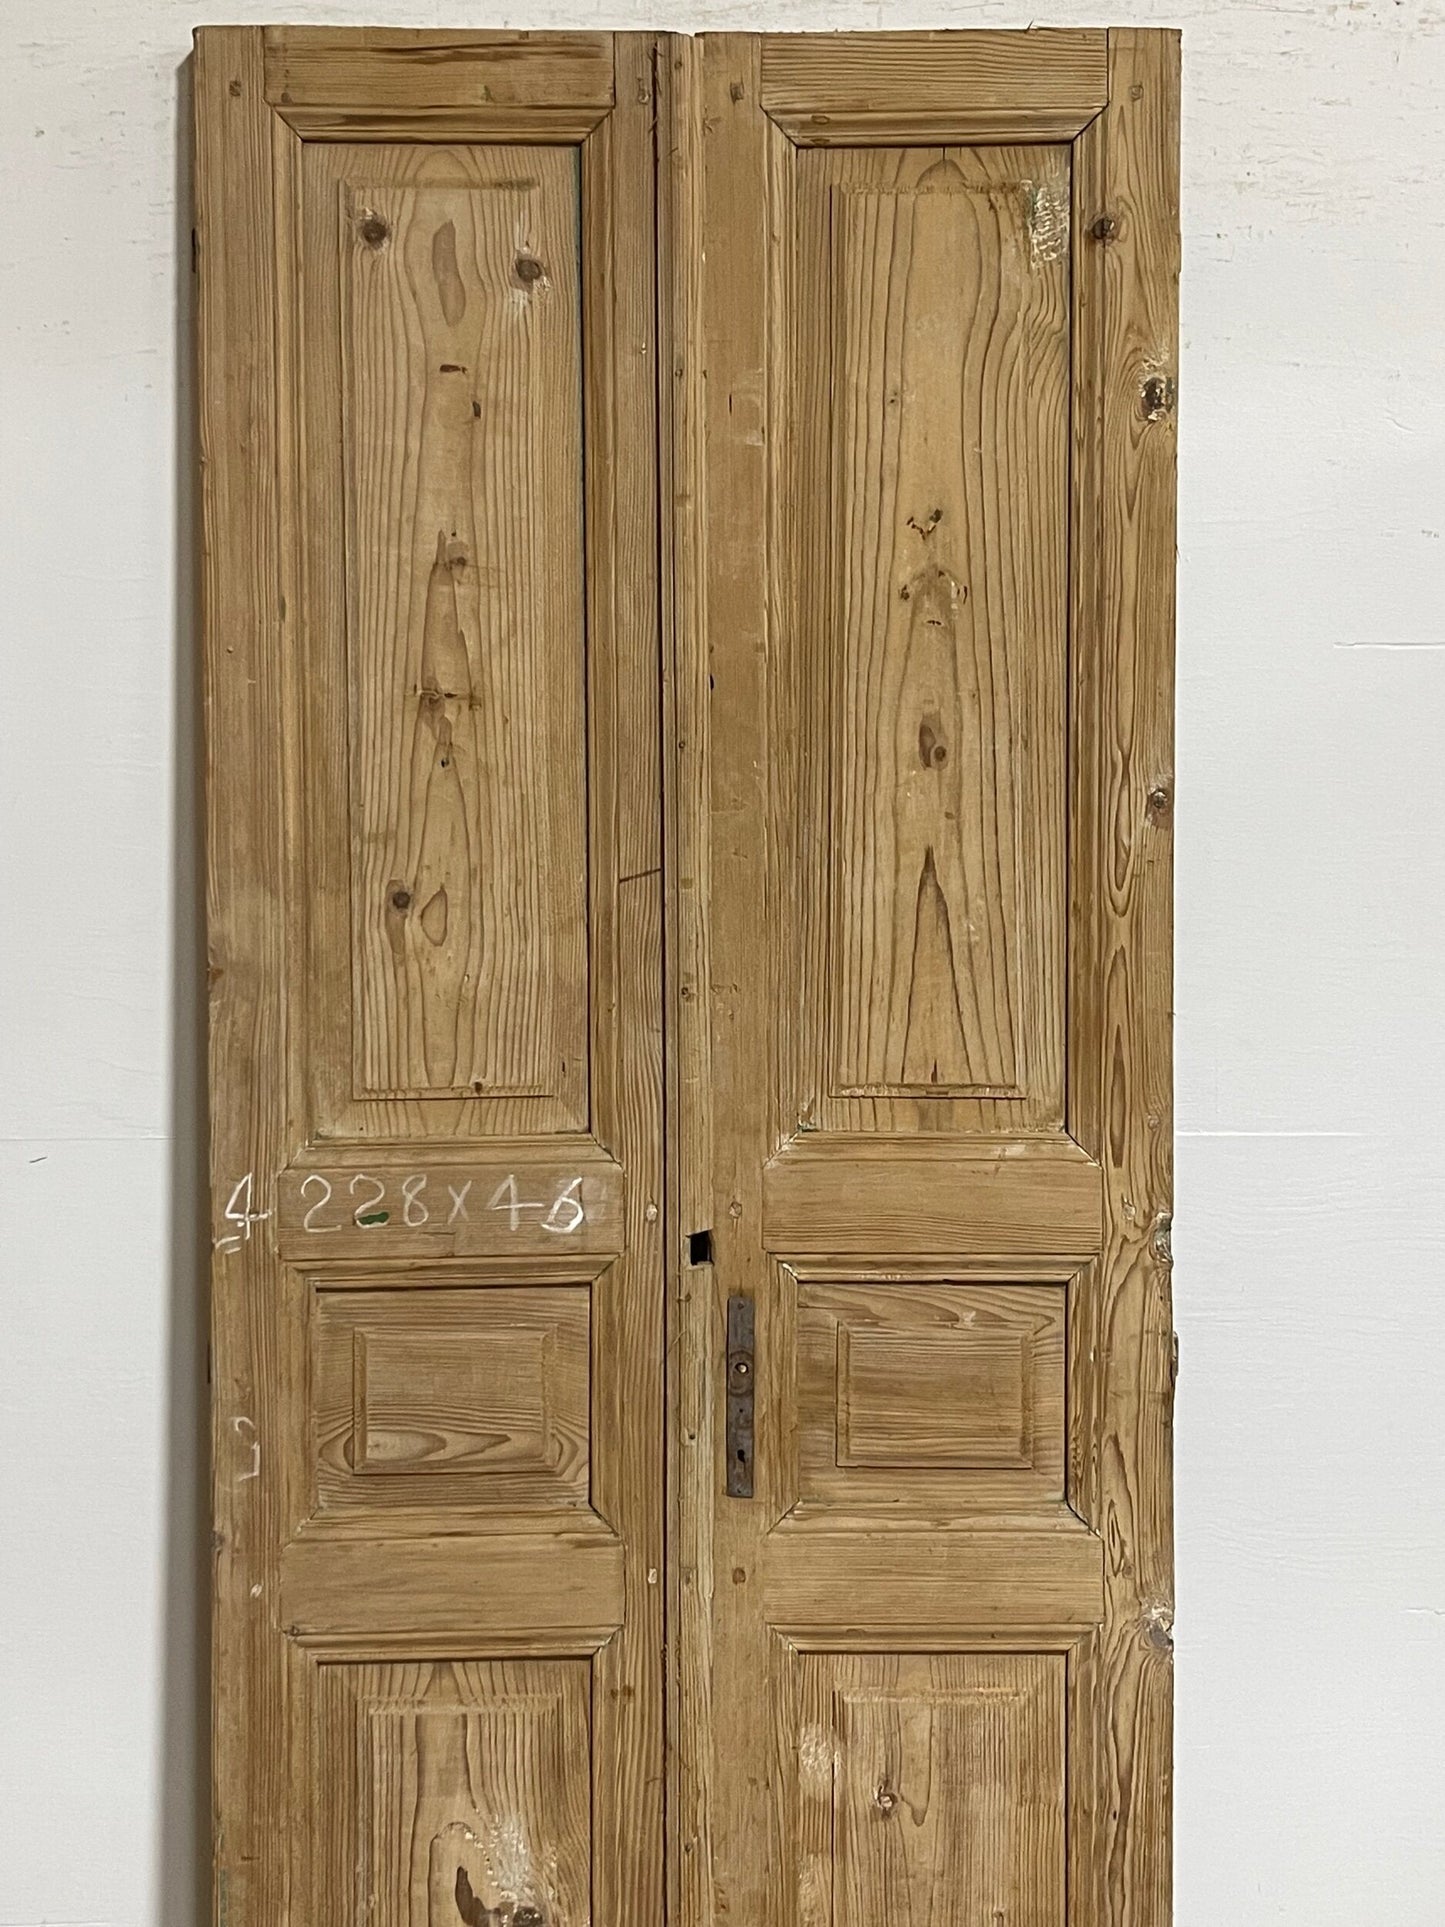 Antique French panel doors (89.75x36.25) I126